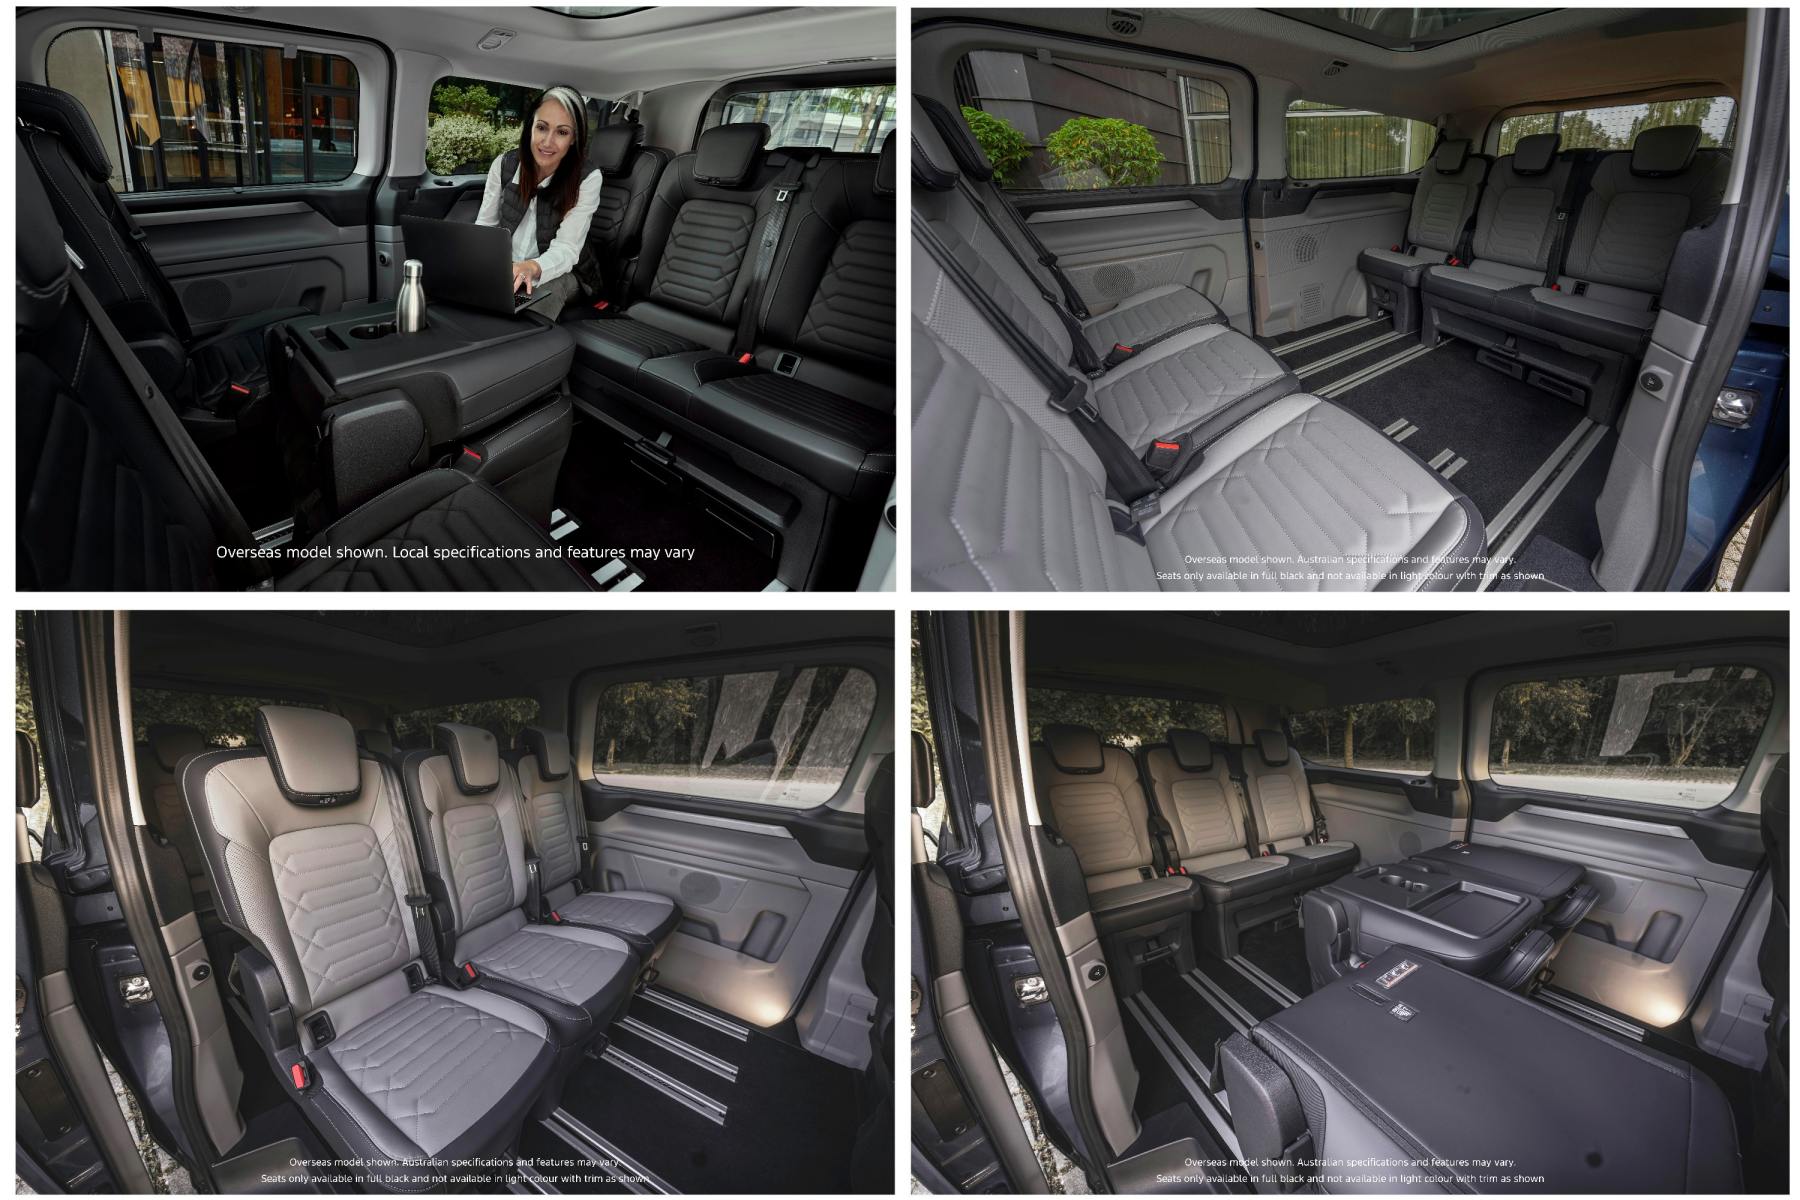 Ford Tourneo TitaniumX internal seat layout 4 pic collage